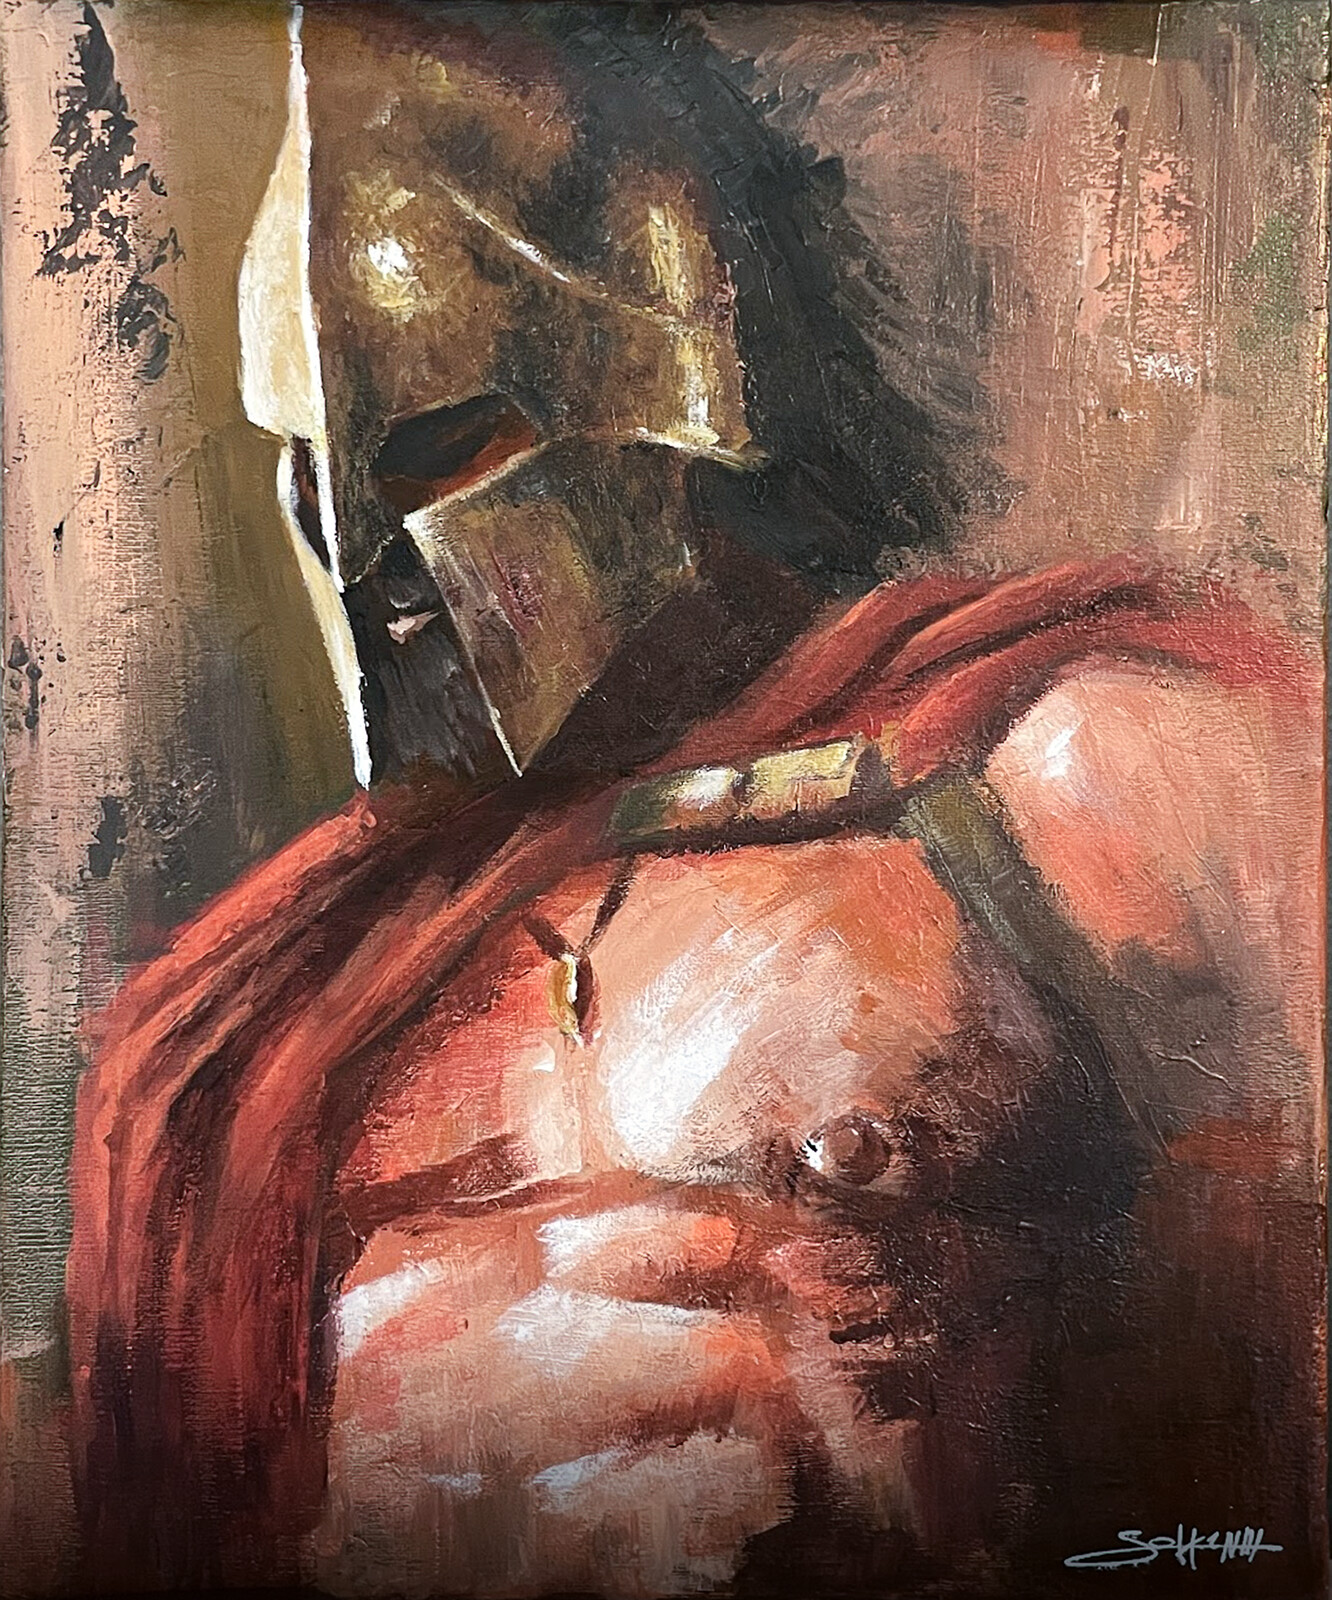 Spartan Acrylic painting